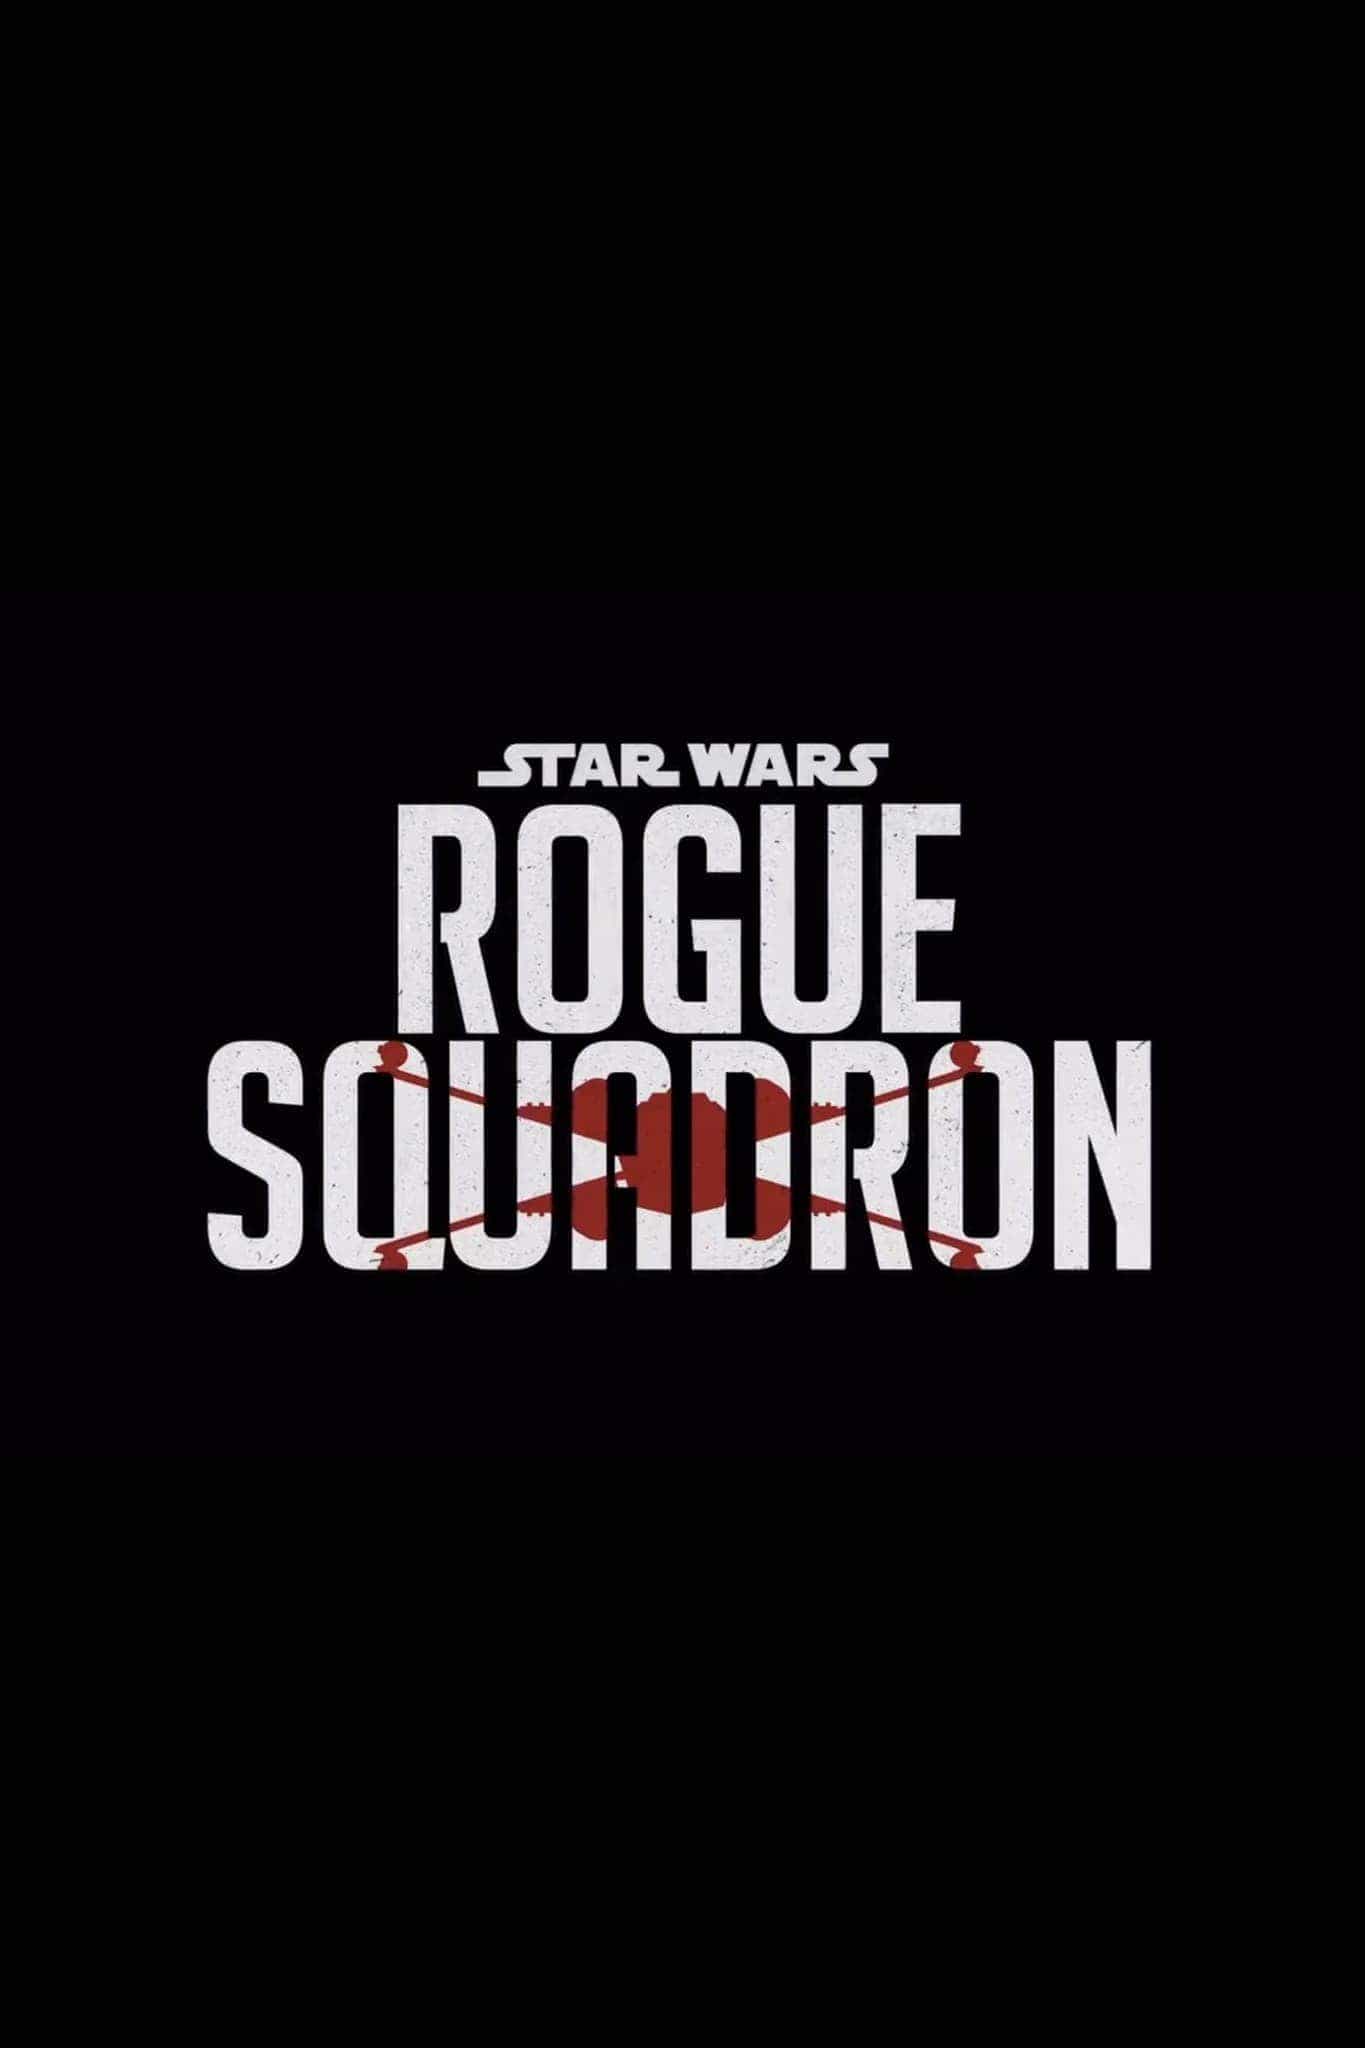 Wonder Woman director Patty Jenkins directing Star Wars movie Rogue Squadron